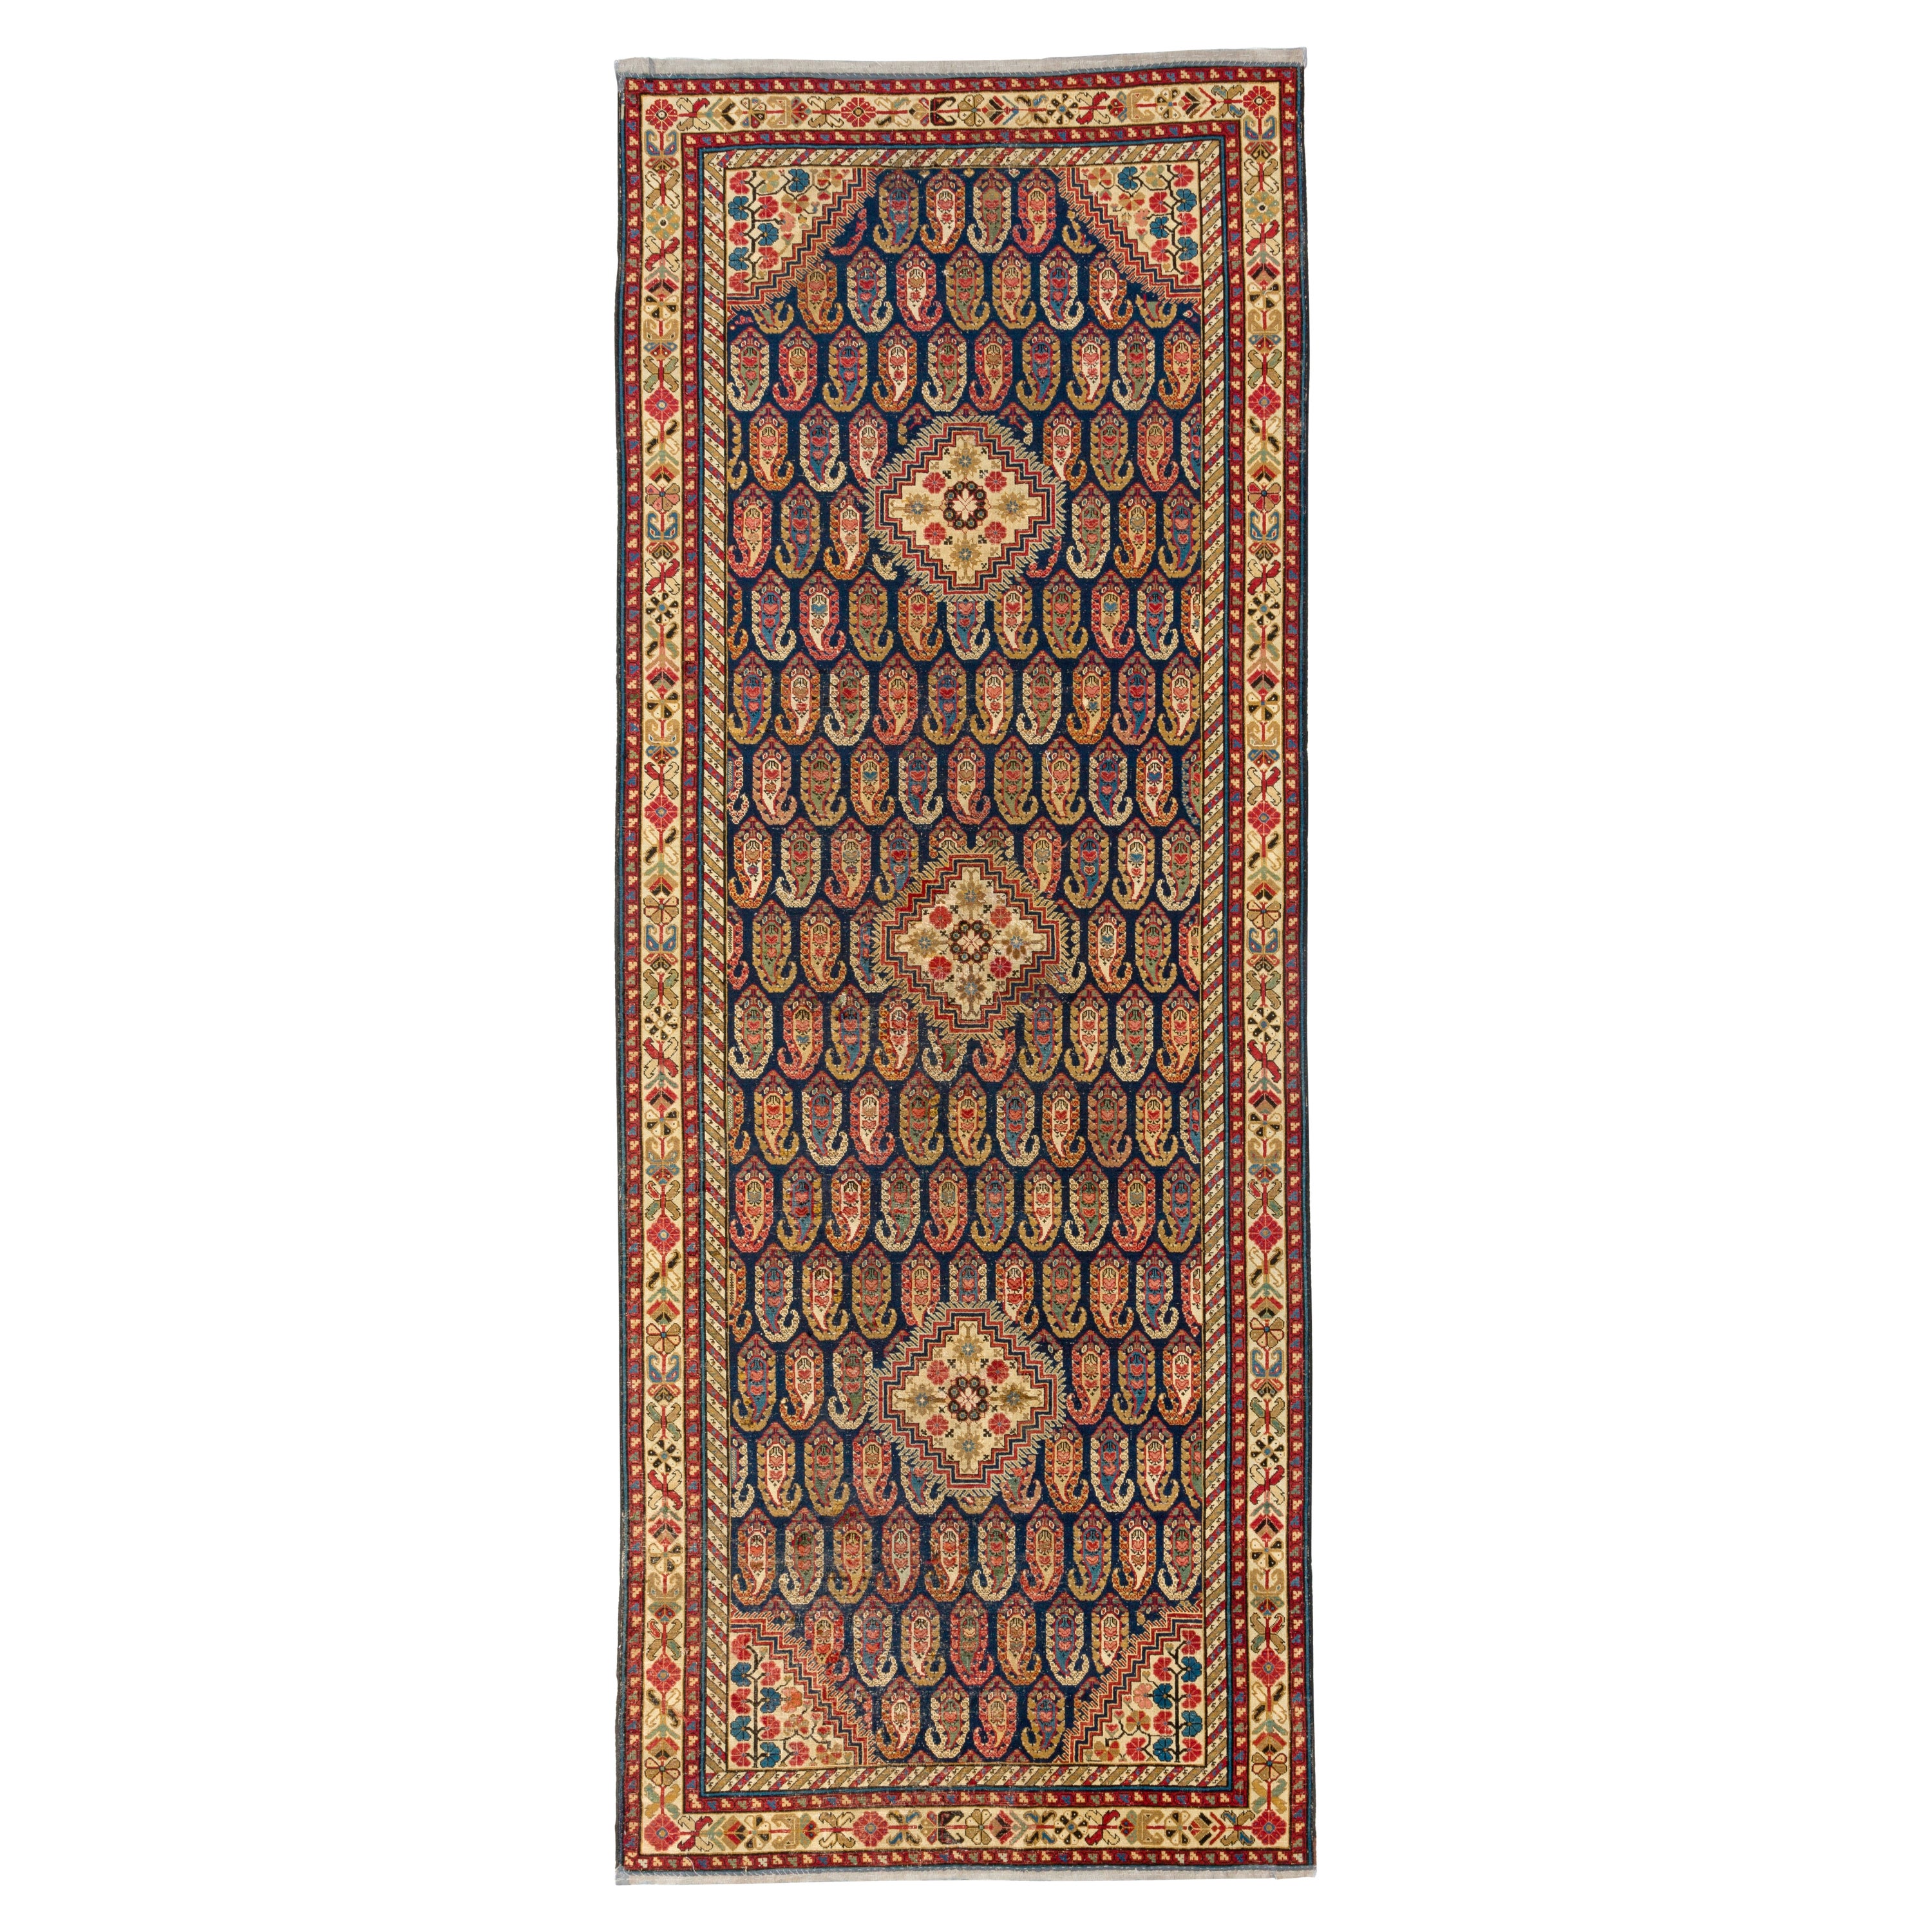 4.6x12 ft Antique Caucasian Khila Rug, Ca 1800, Museum Quality Collectors Carpet